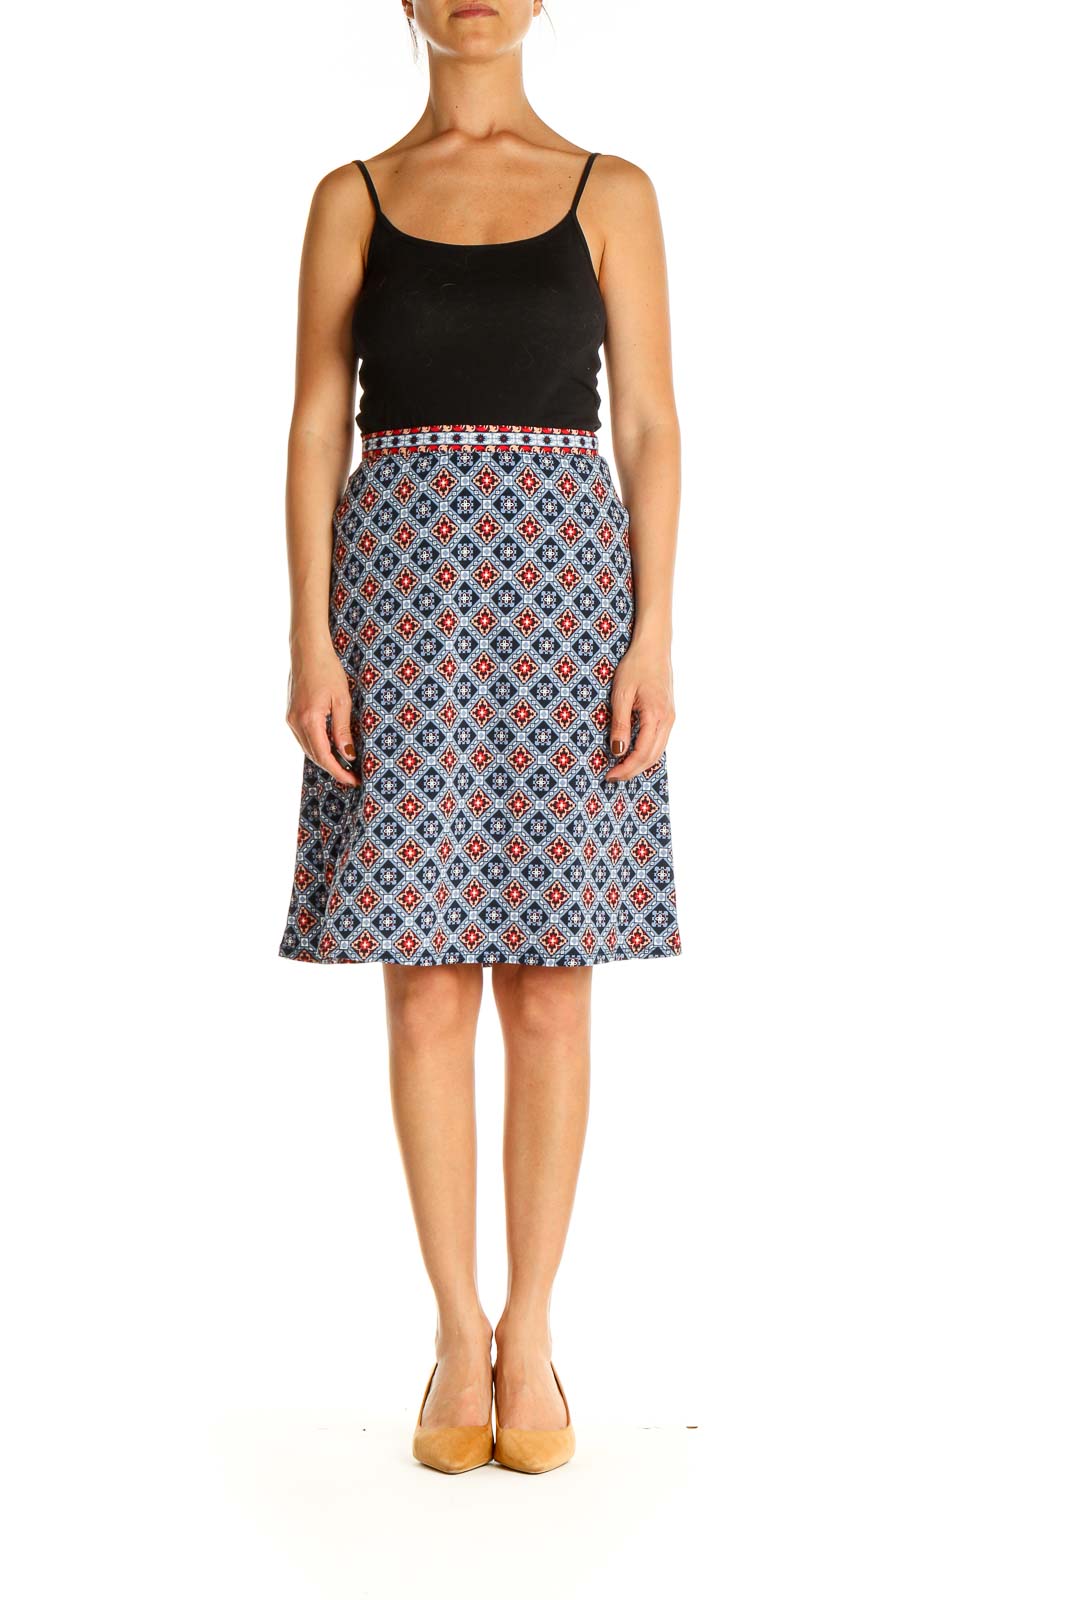 Max Studio - Blue Printed Bohemian A-Line Skirt Polyester Spandex | SilkRoll